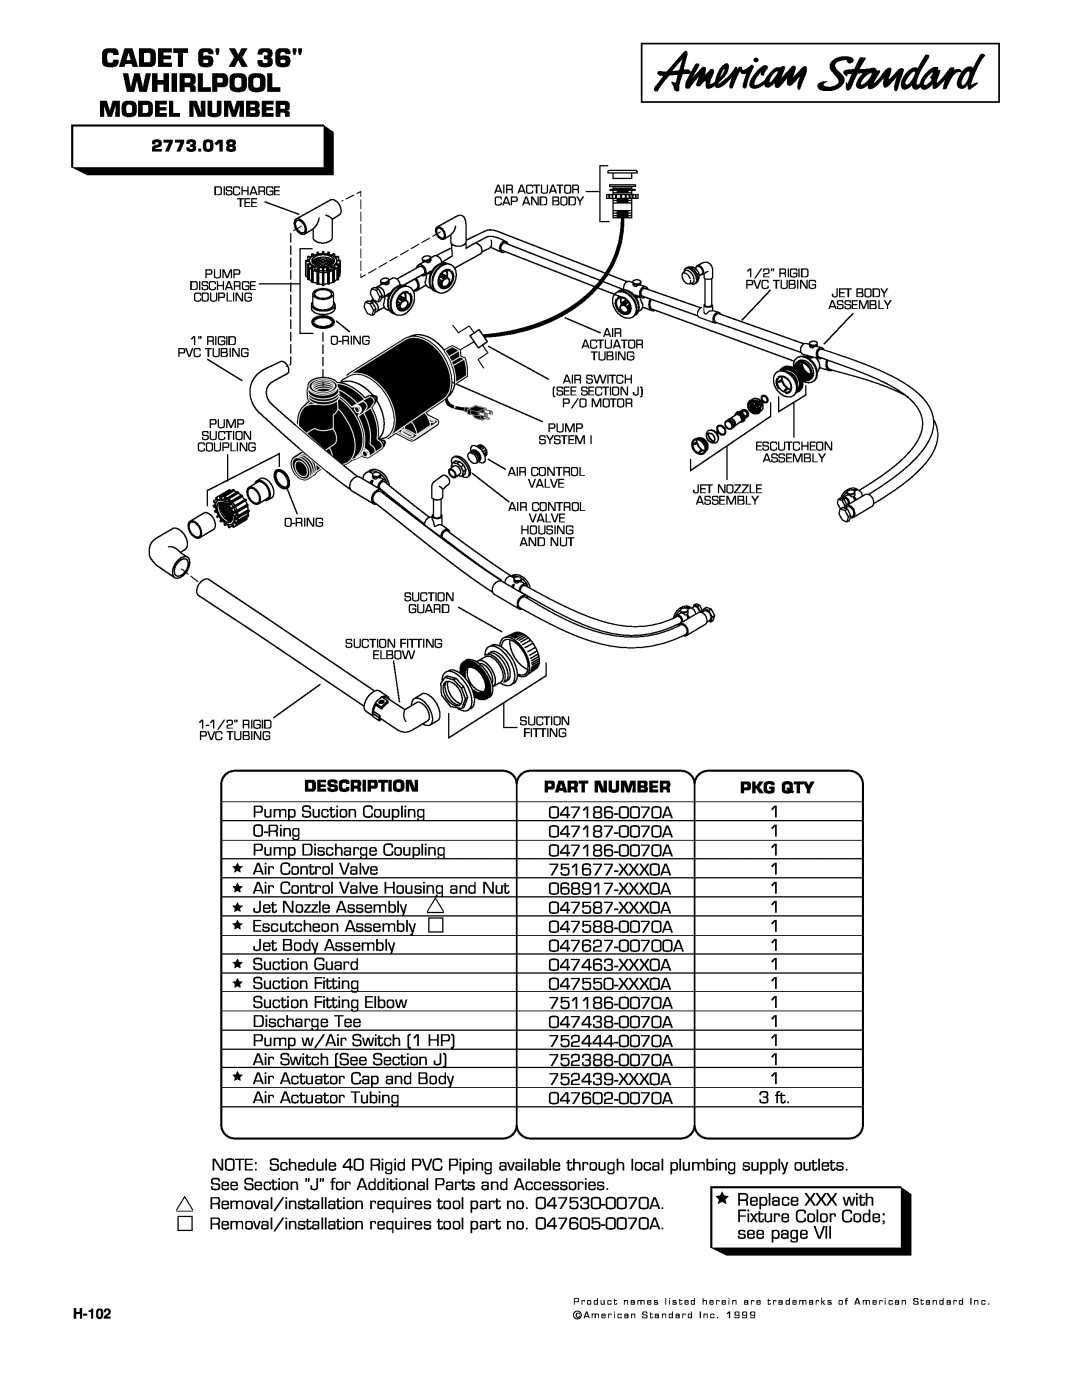 American Standard 2773.018 manual CADET 6 X WHIRLPOOL, Model Number, Description, Part Number, Pkg Qty 